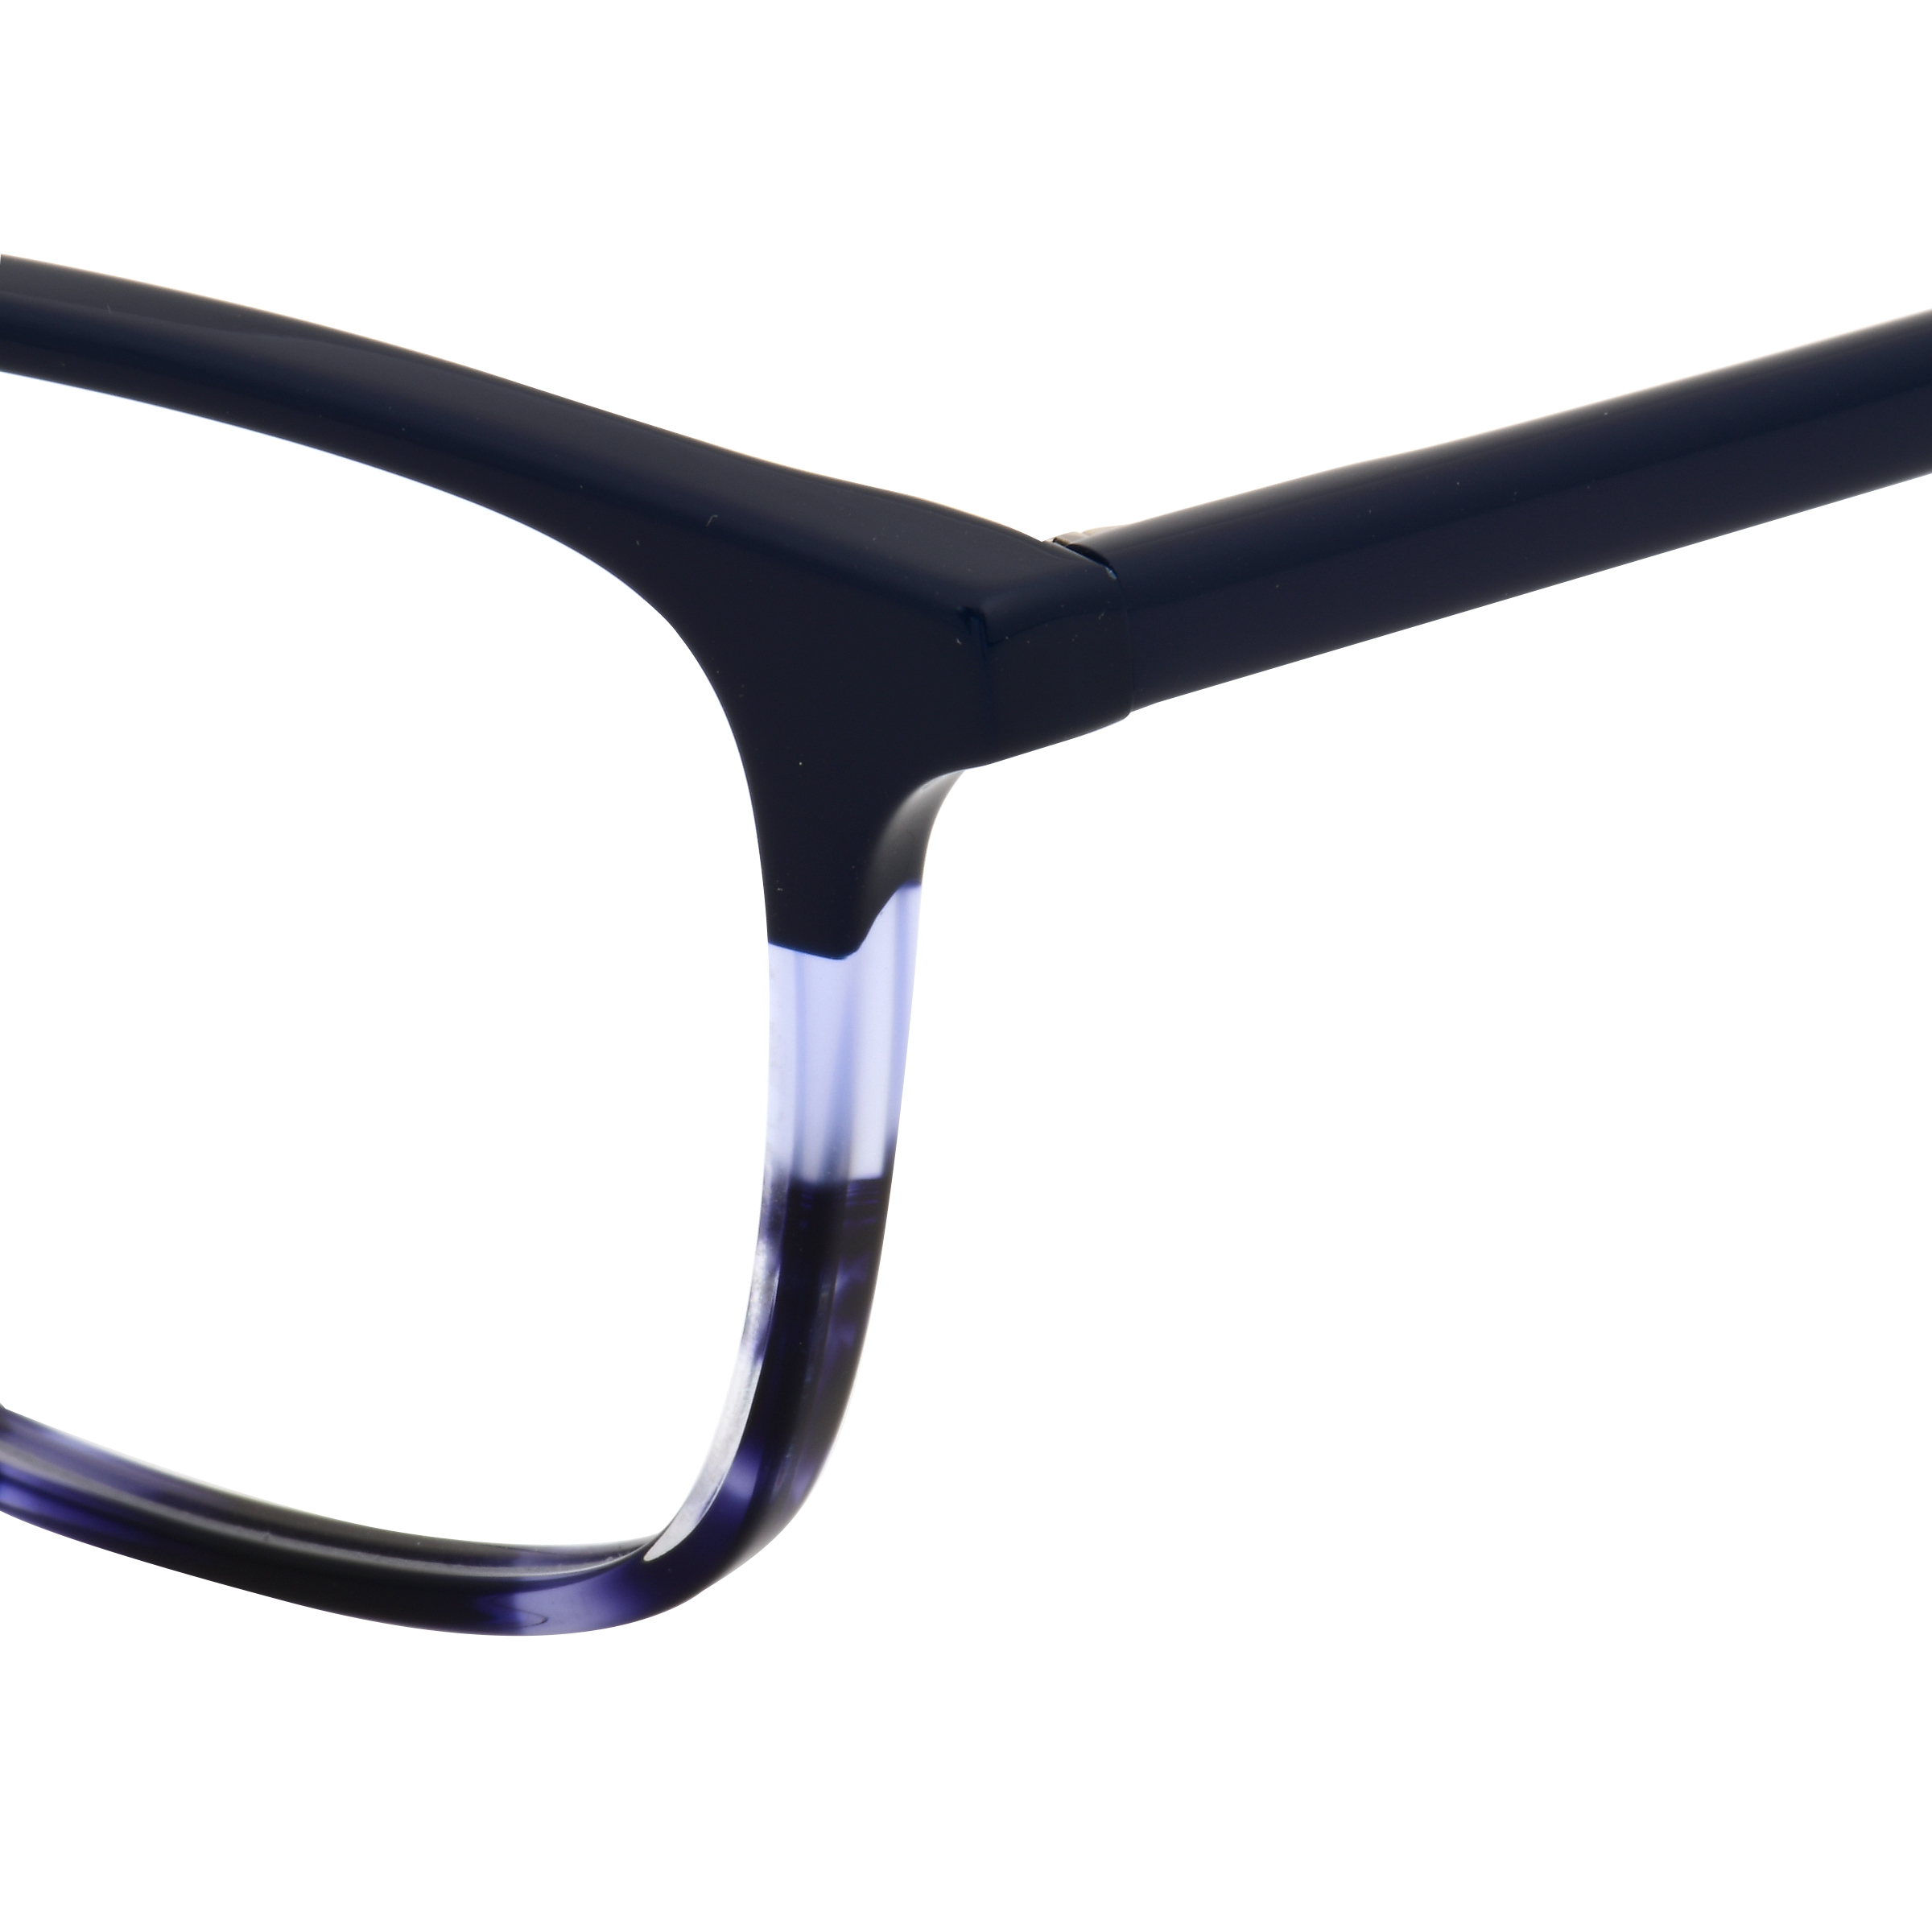 Black Square Clear Glasses Frames